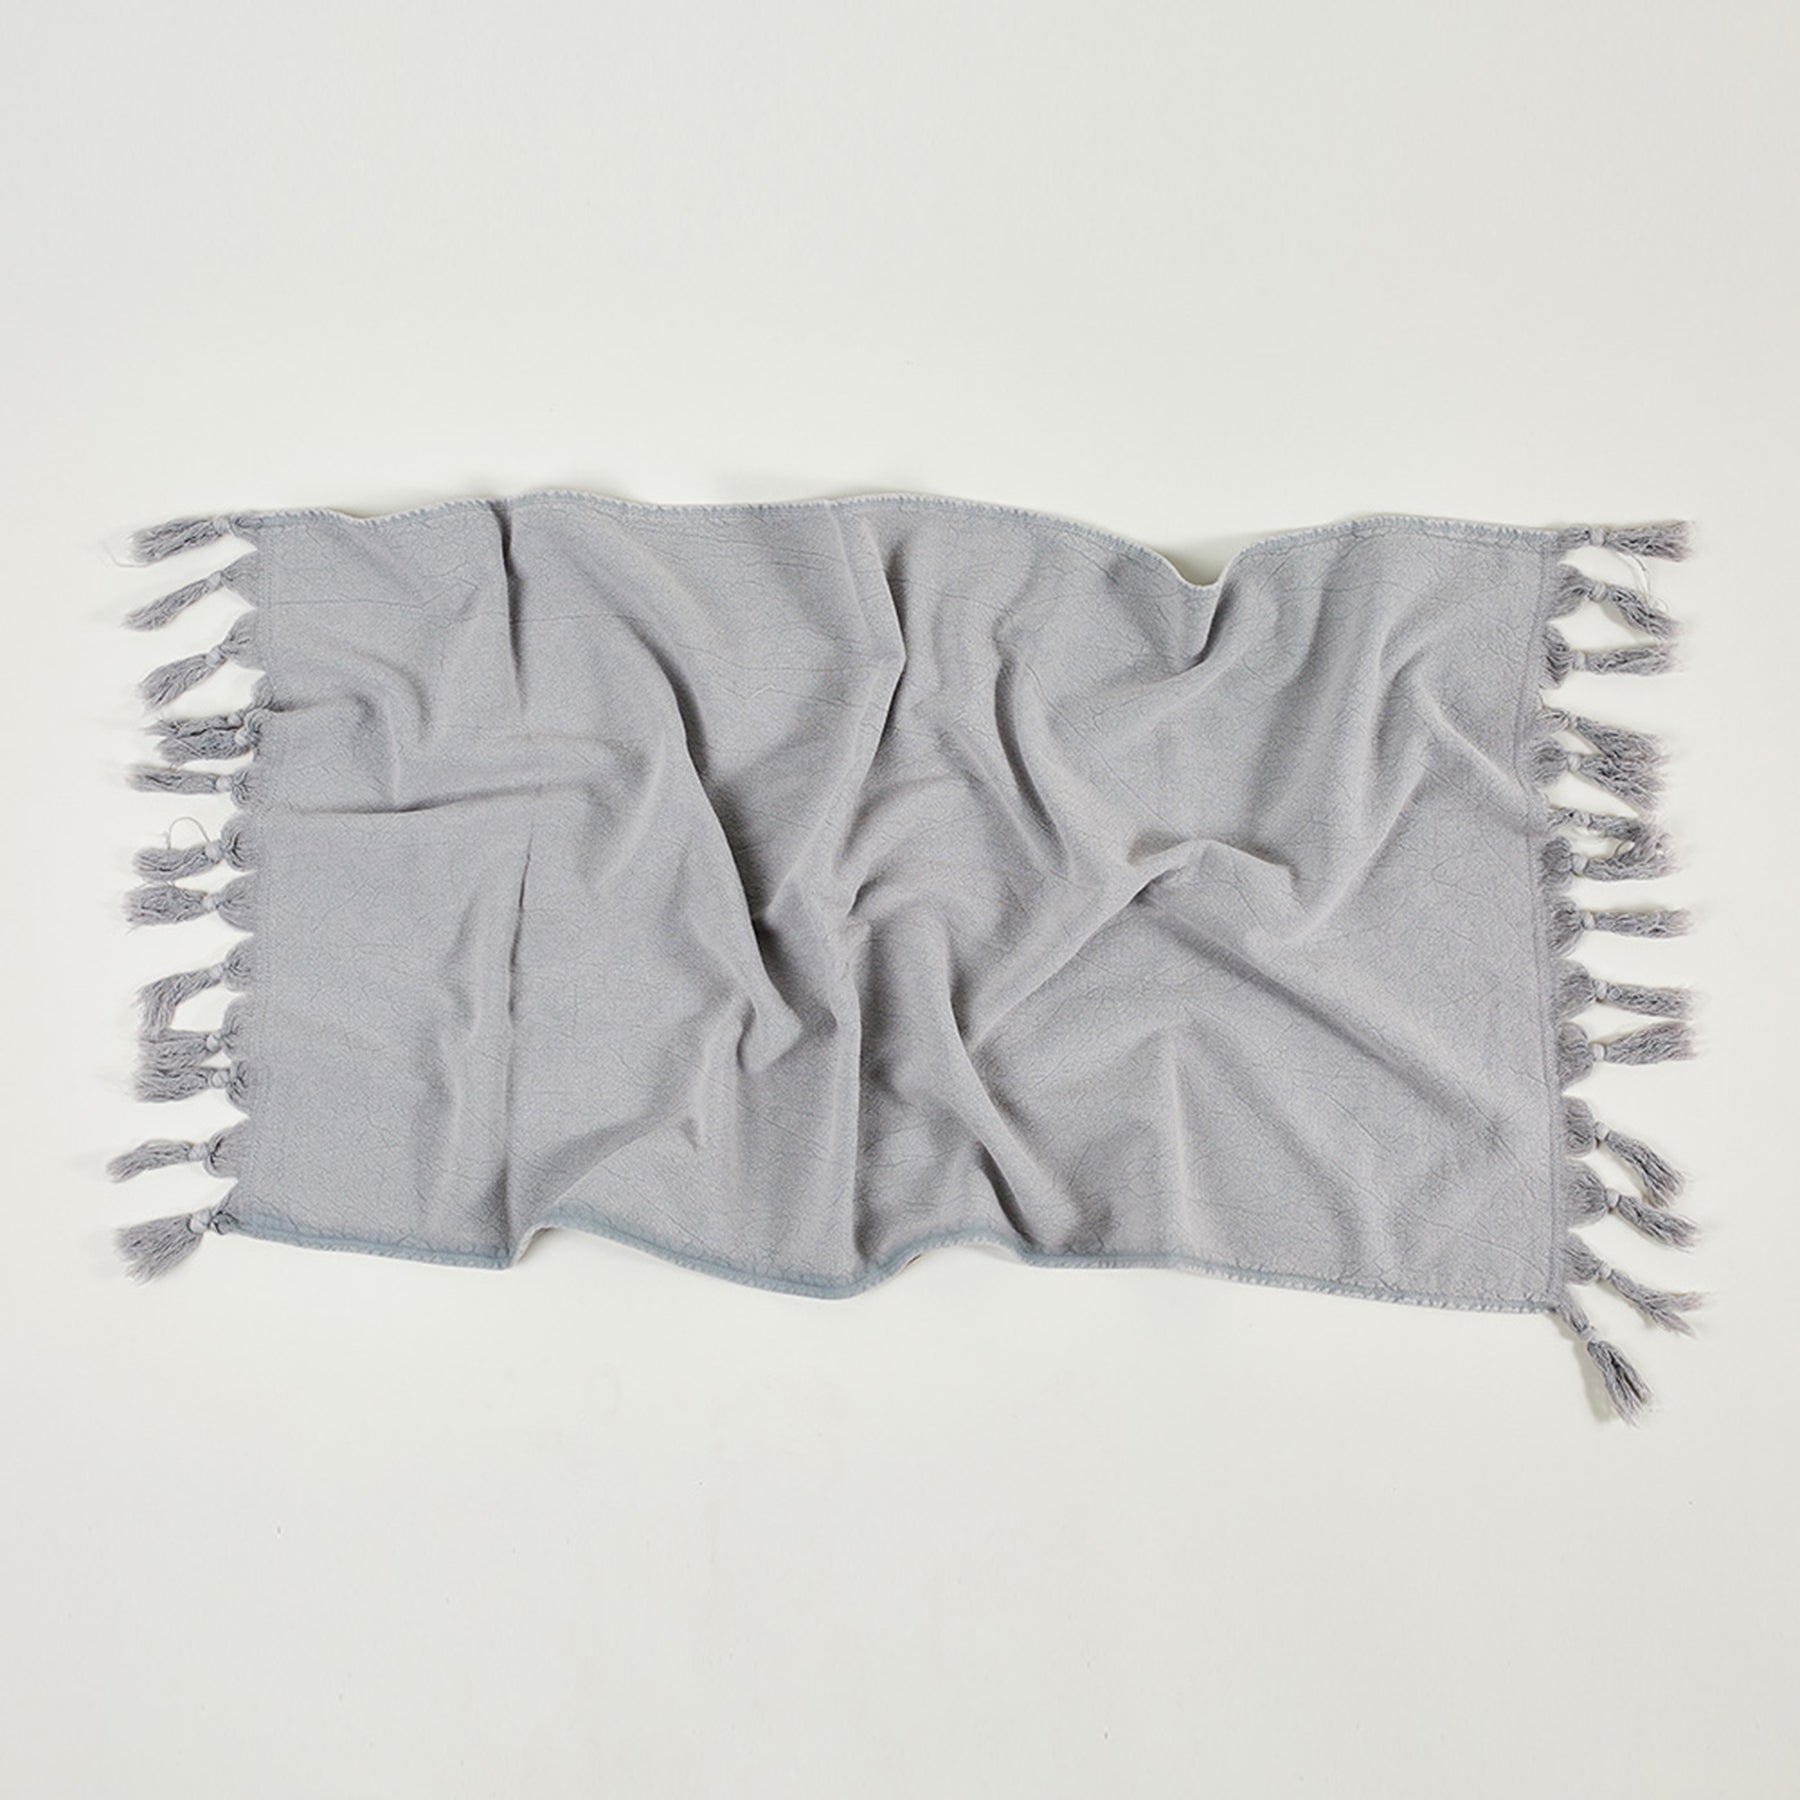 Vintage Wash Towel Collection - Pale Grey